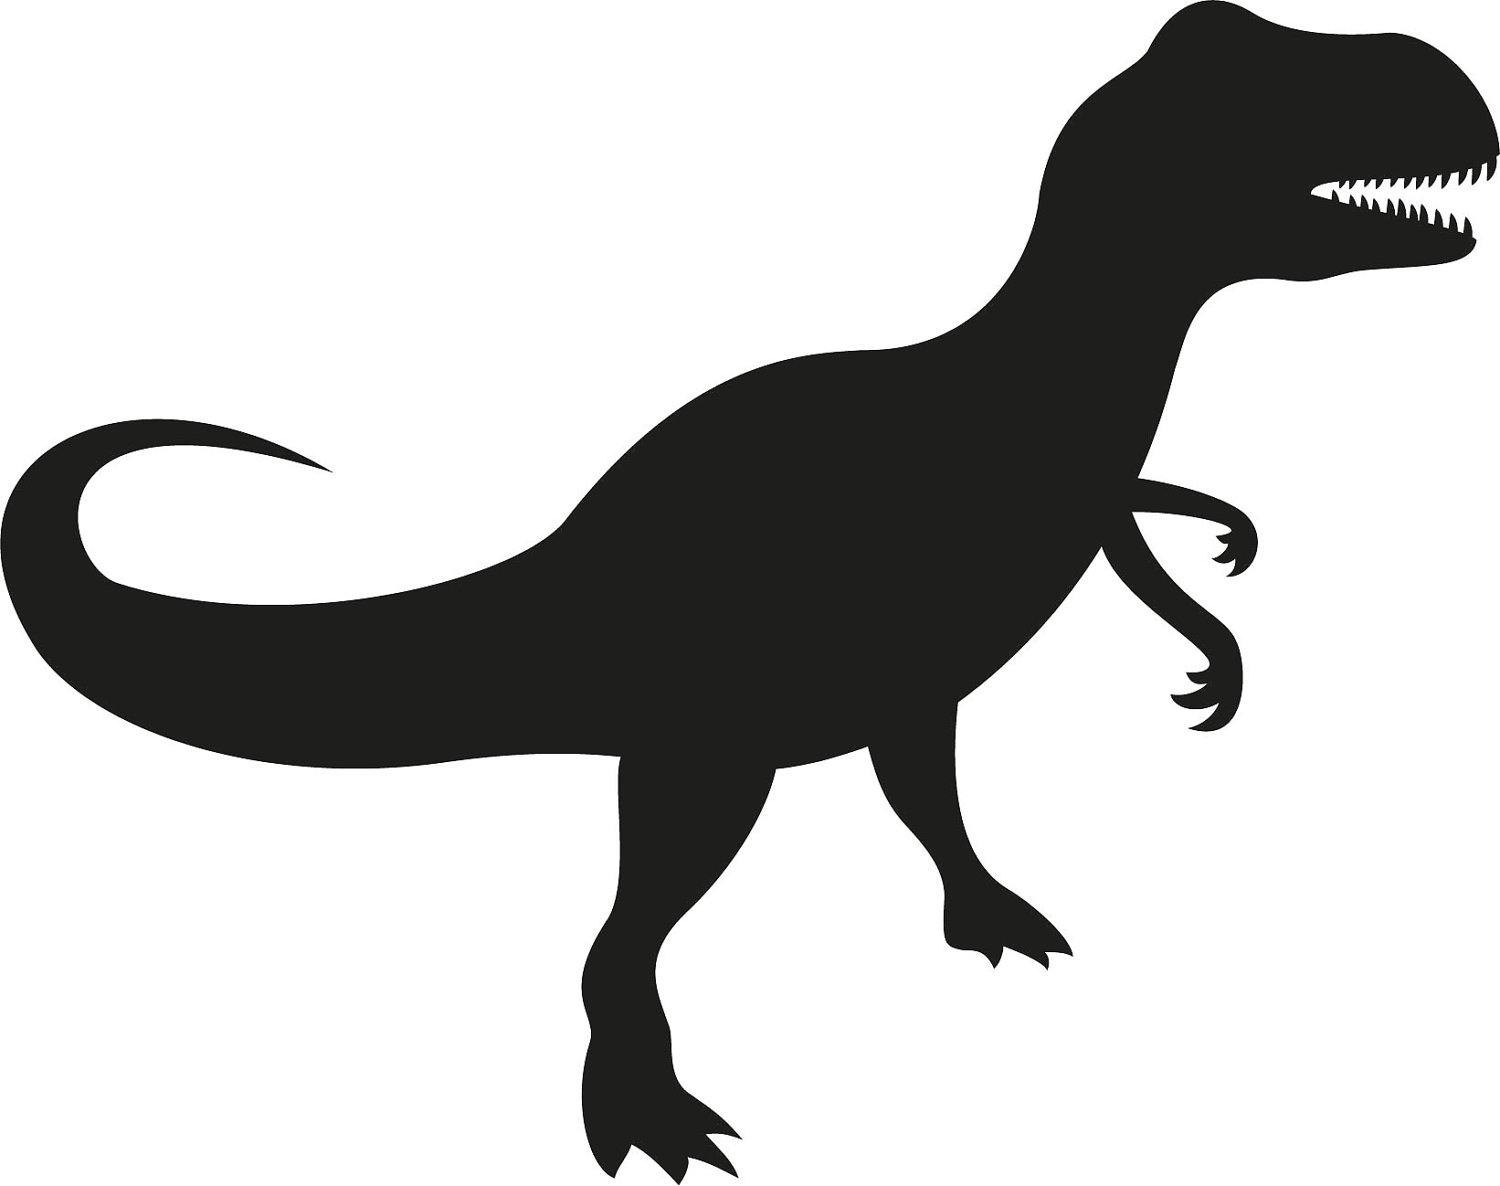 Free Dinosaur Silhouette Clip Art, Download Free Dinosaur Silhouette Clip Art png images, Free